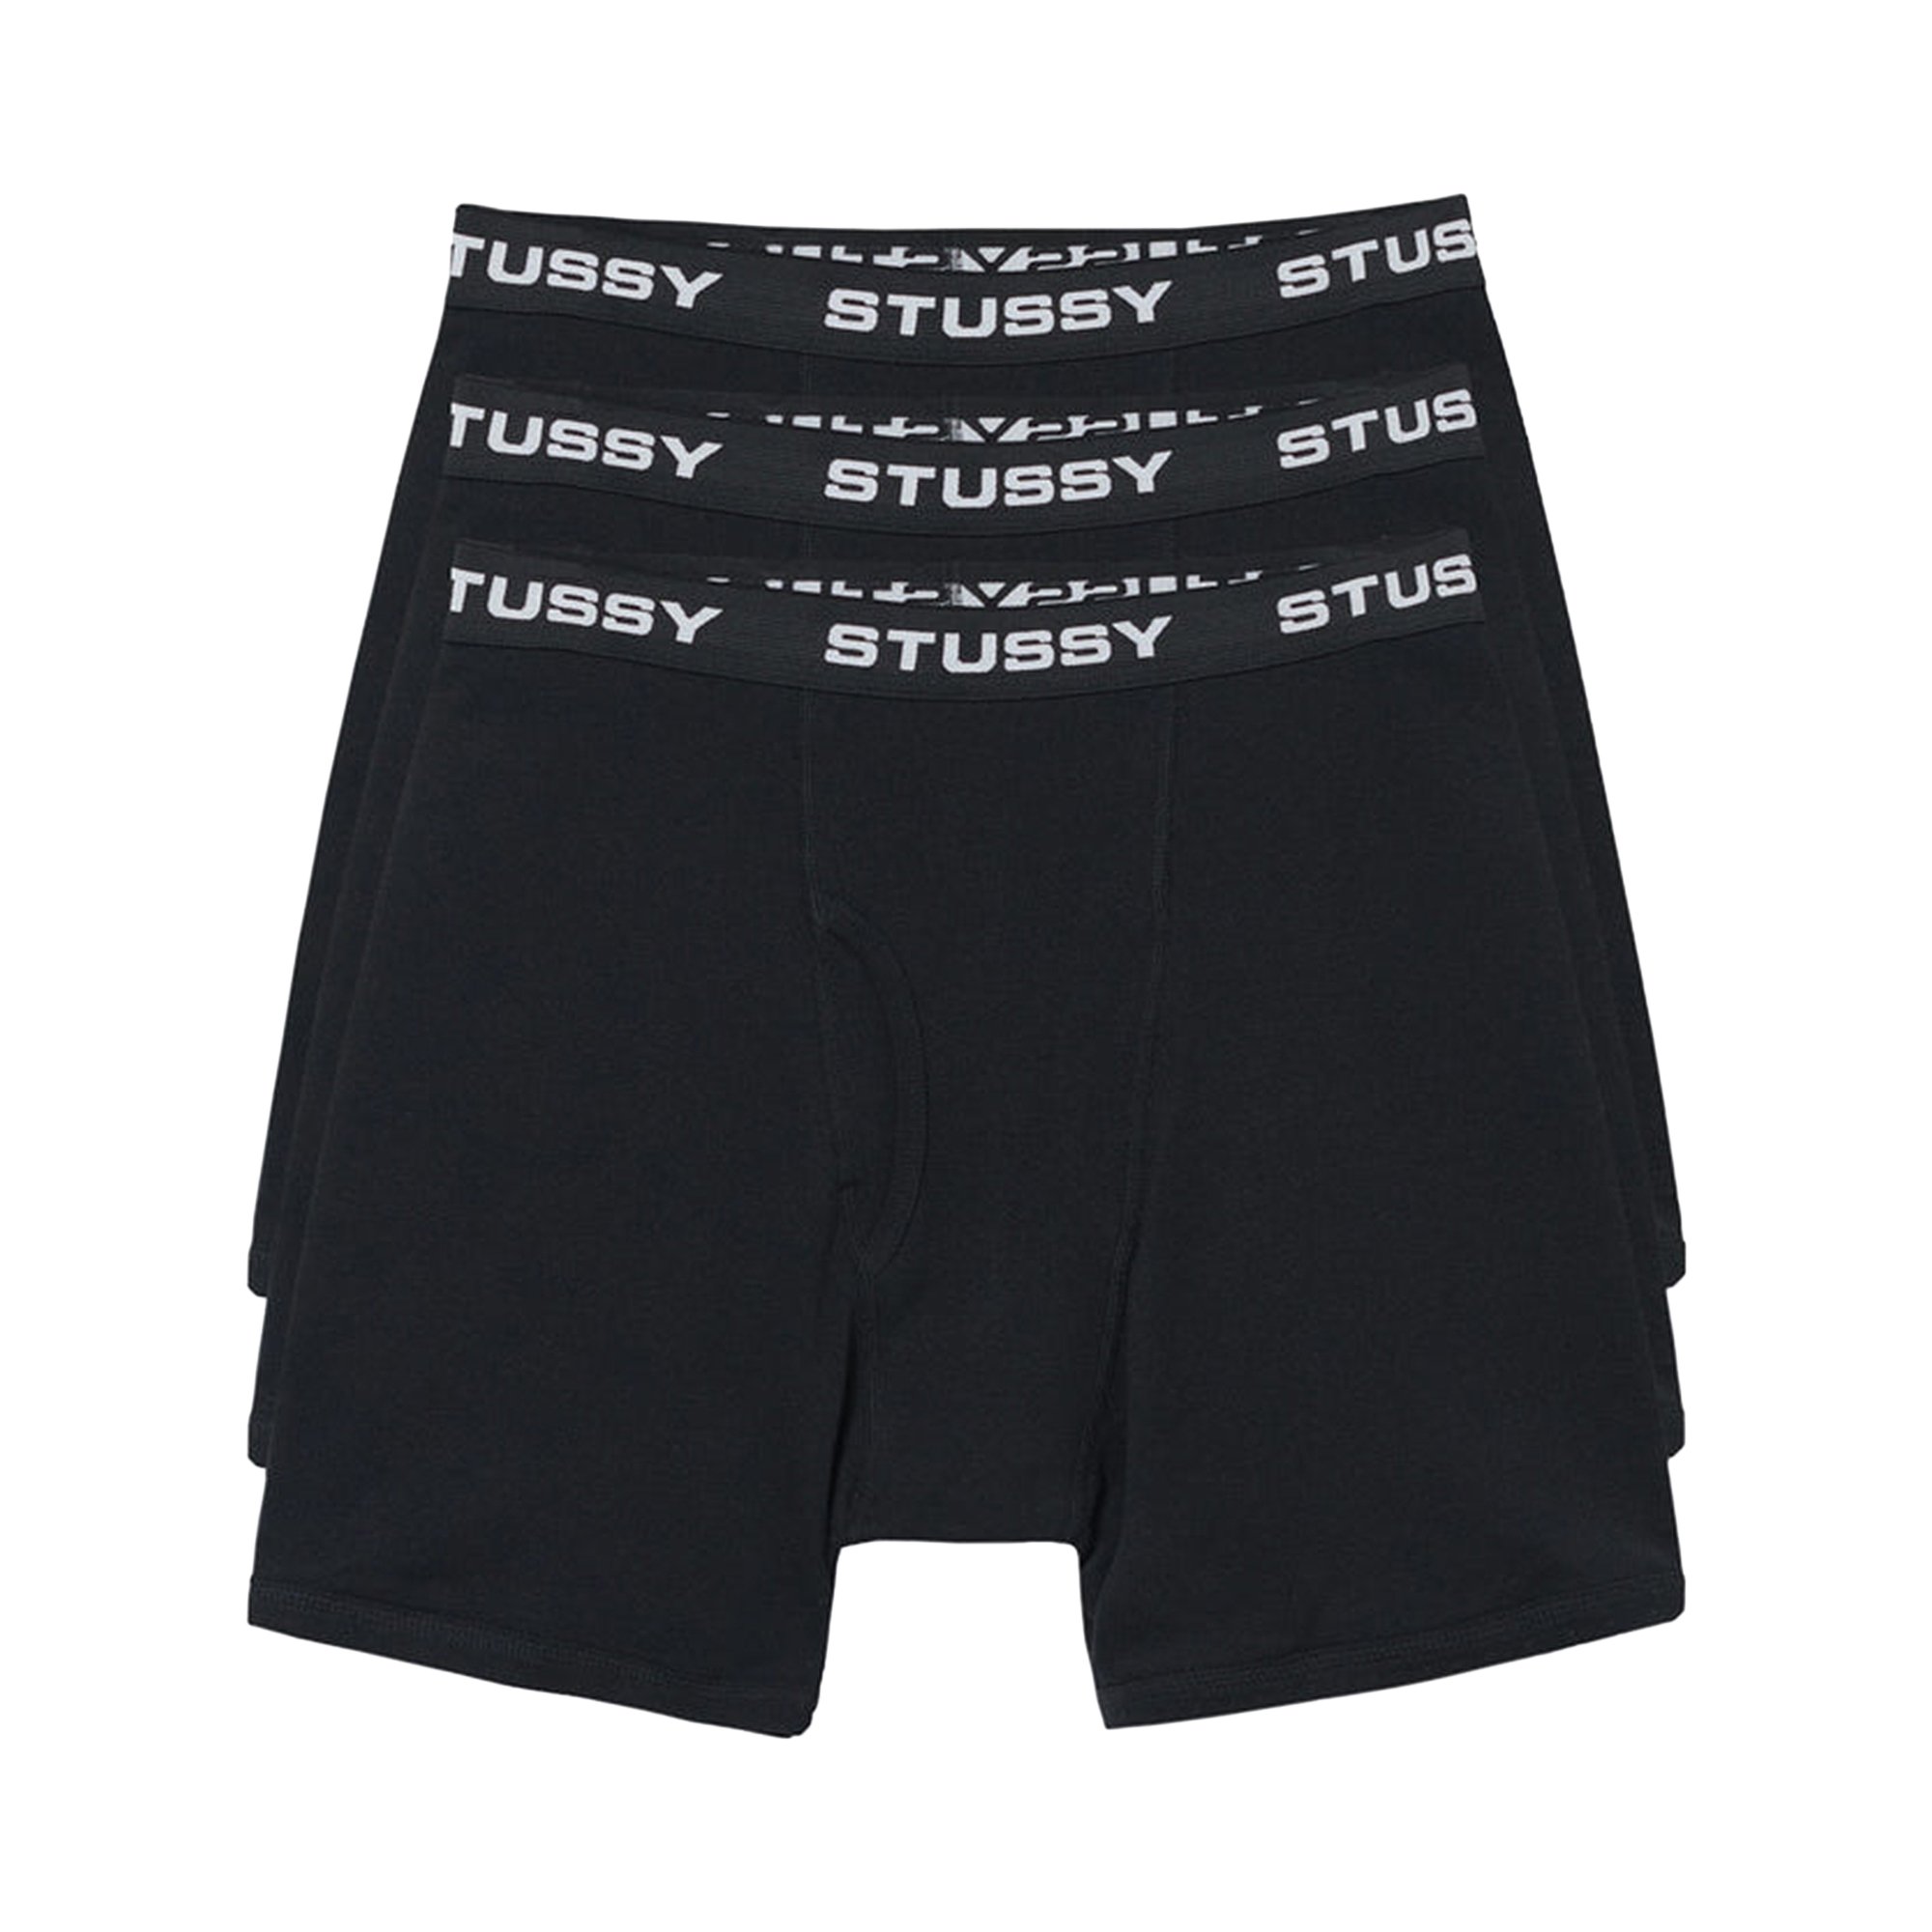 Stussy Boxer Briefs (3 Pack) 'Black'